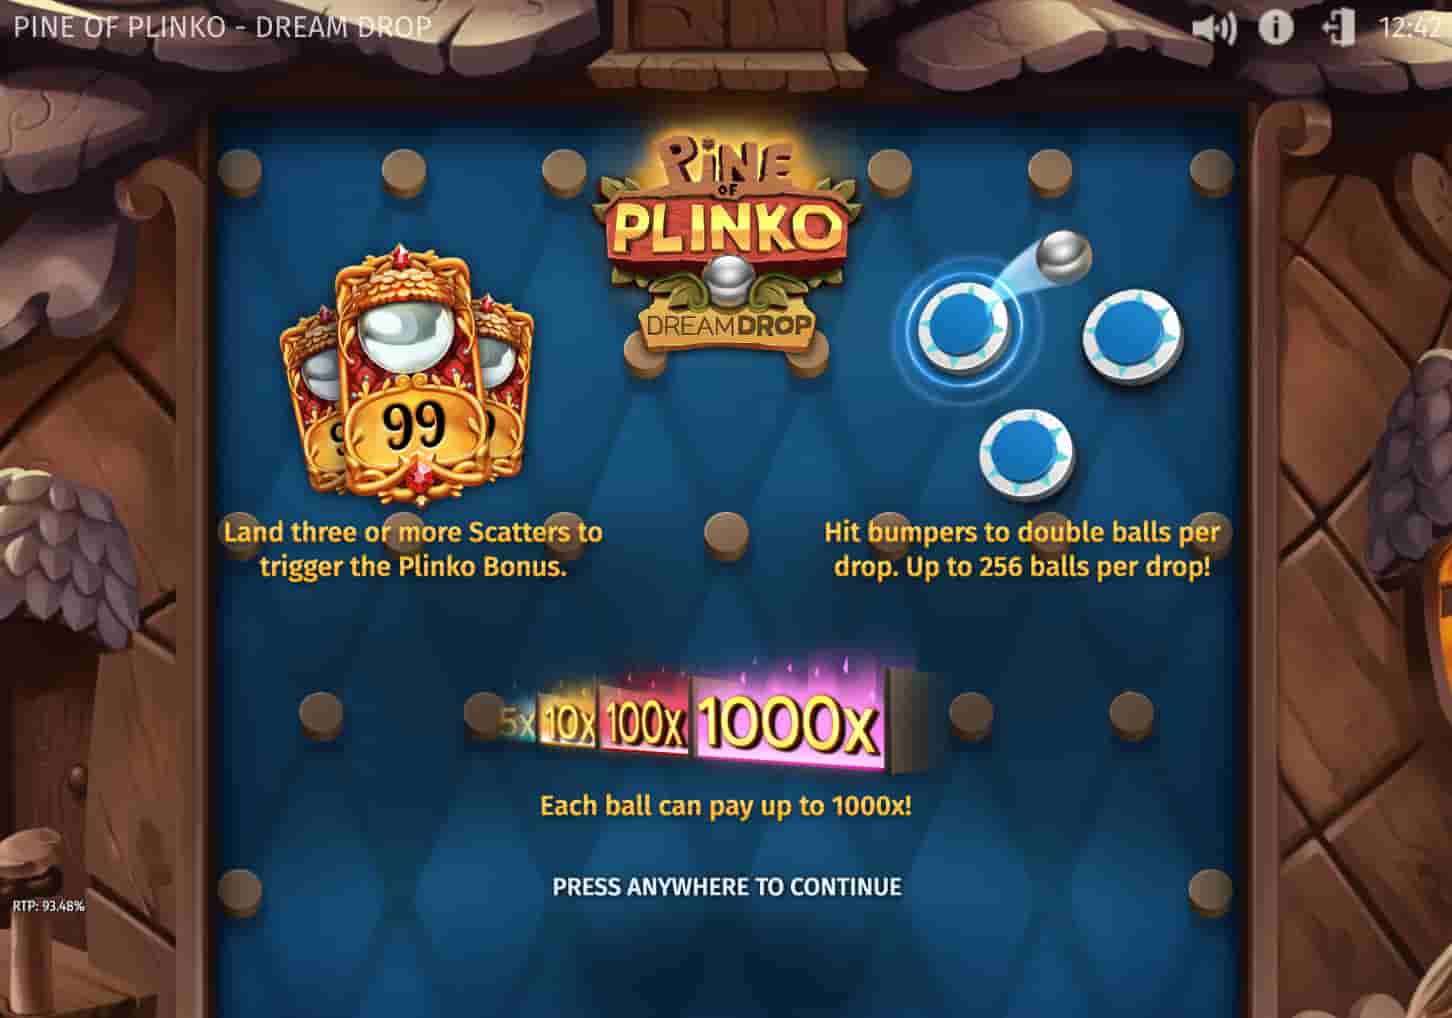 Pine of Plinko Dream Drop screenshot 5